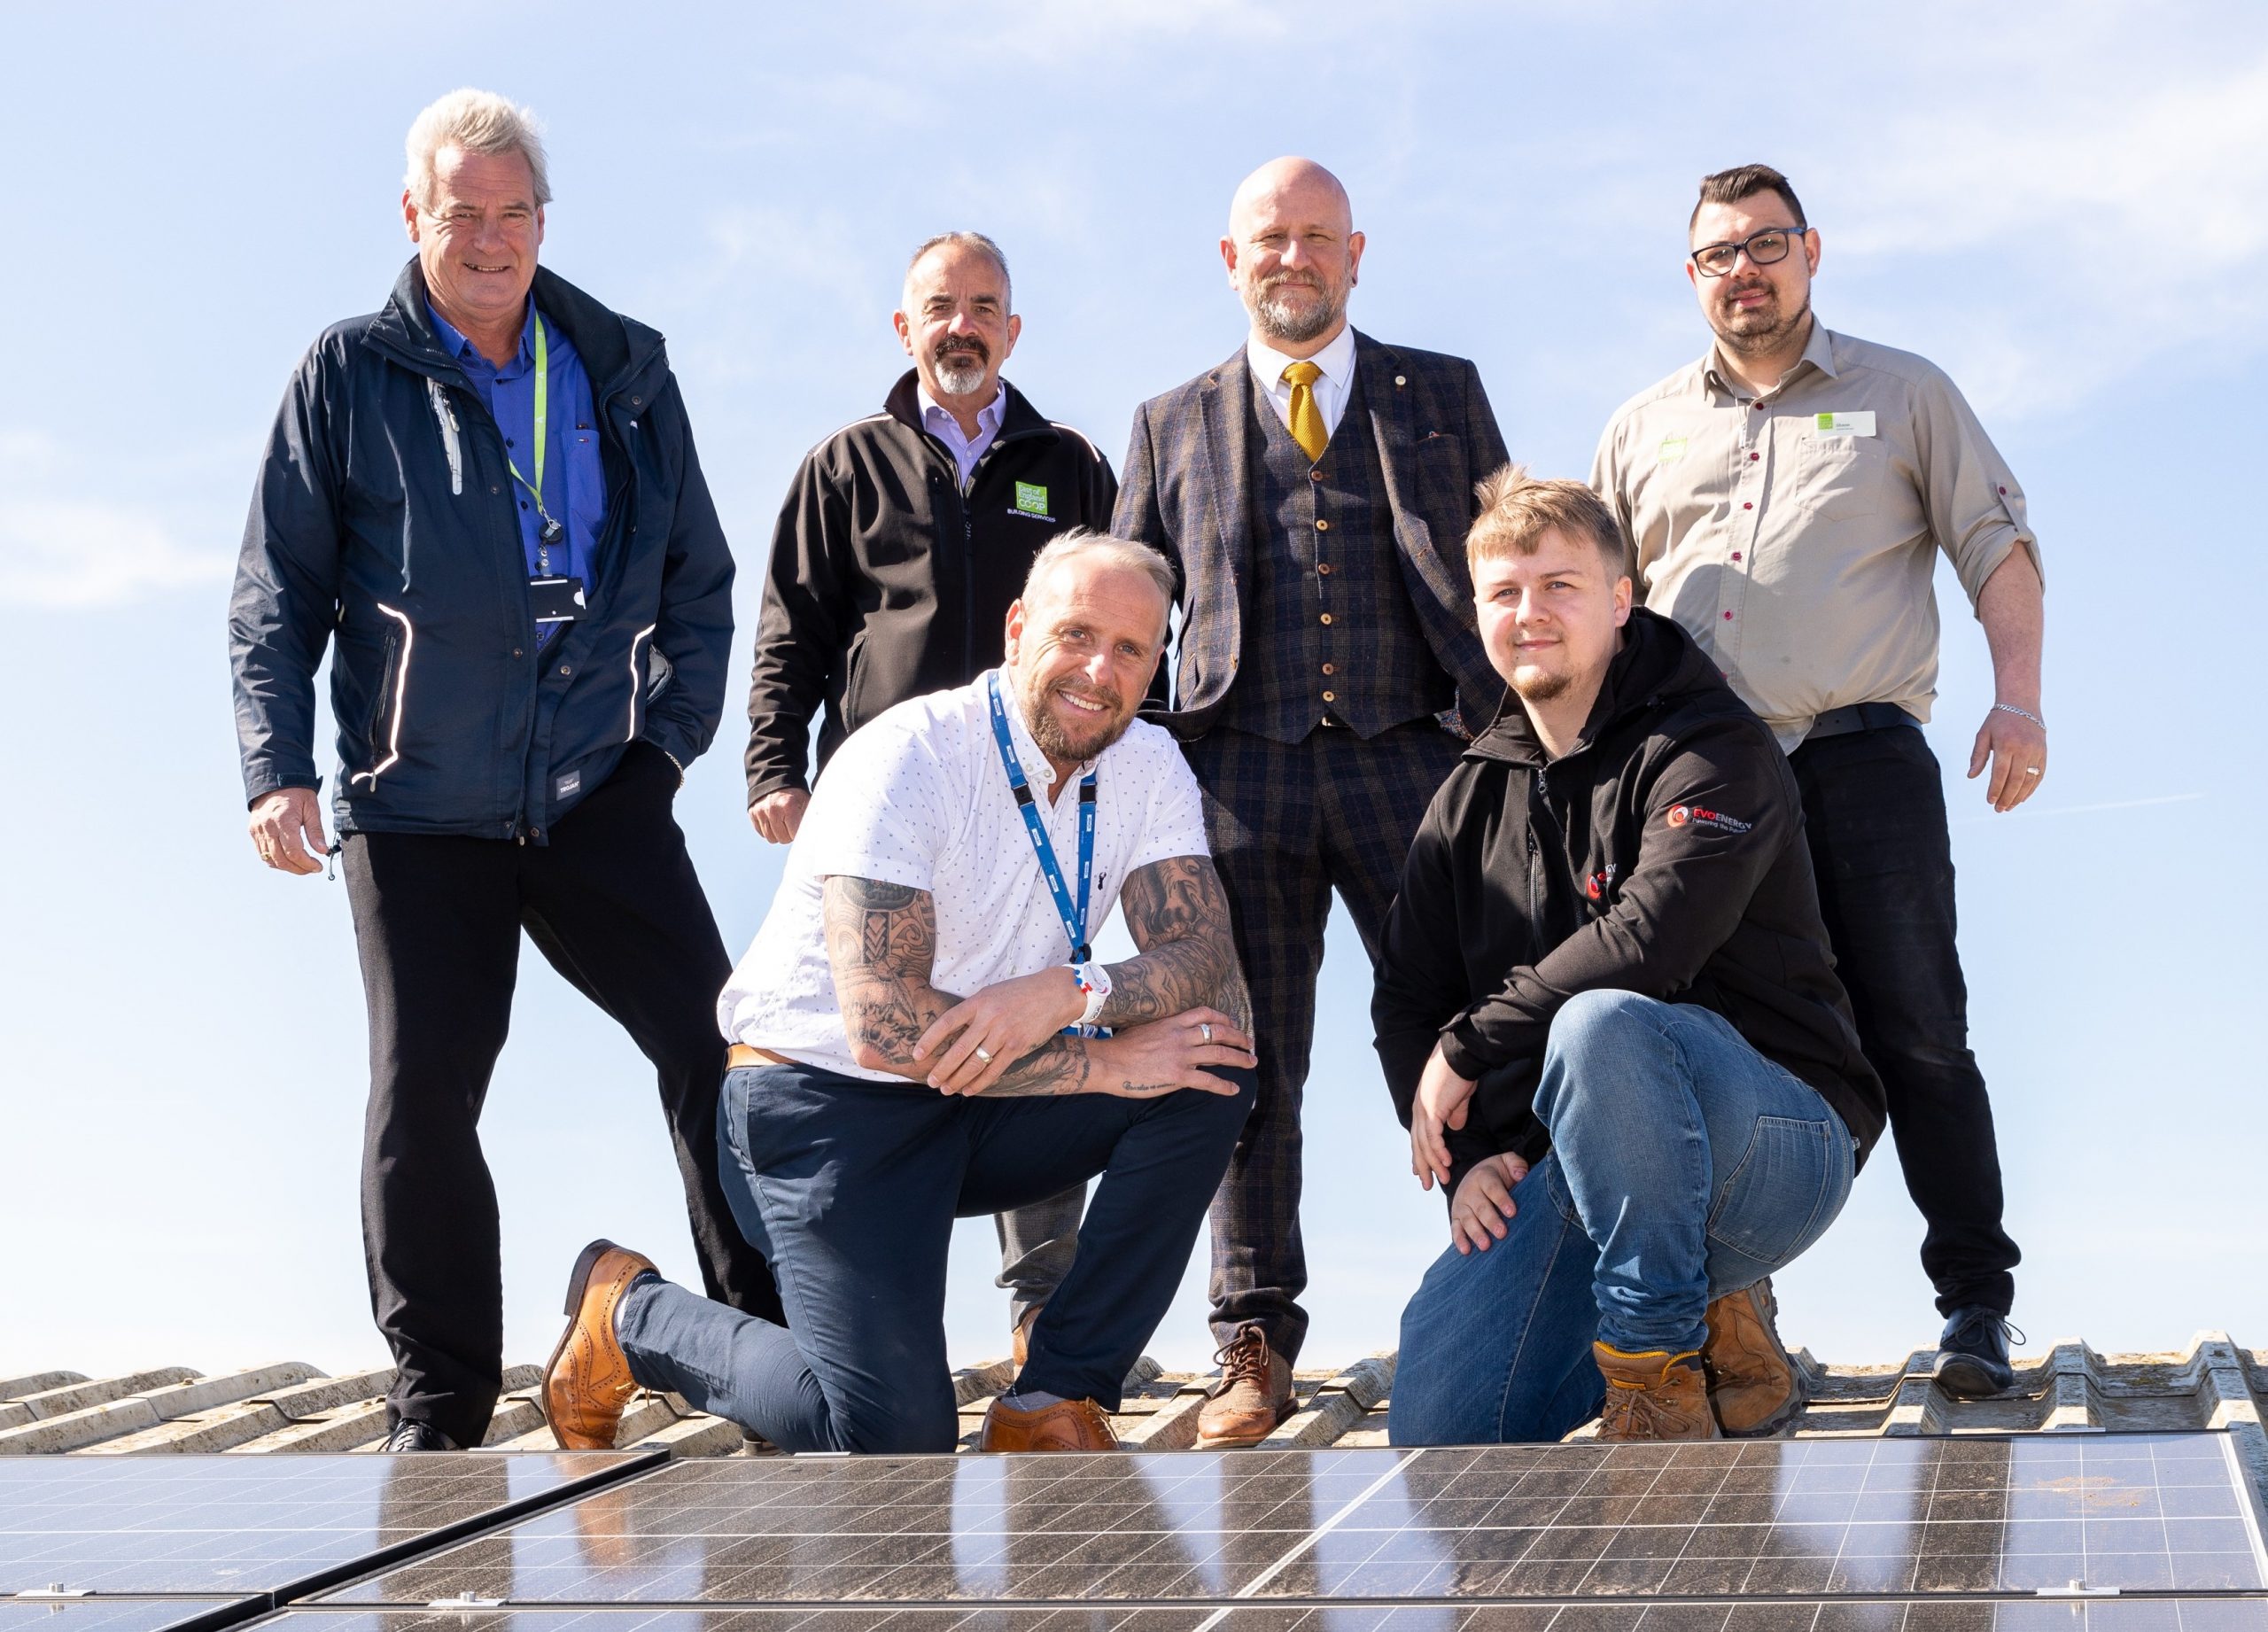 Six members of staff stood next to solar panels